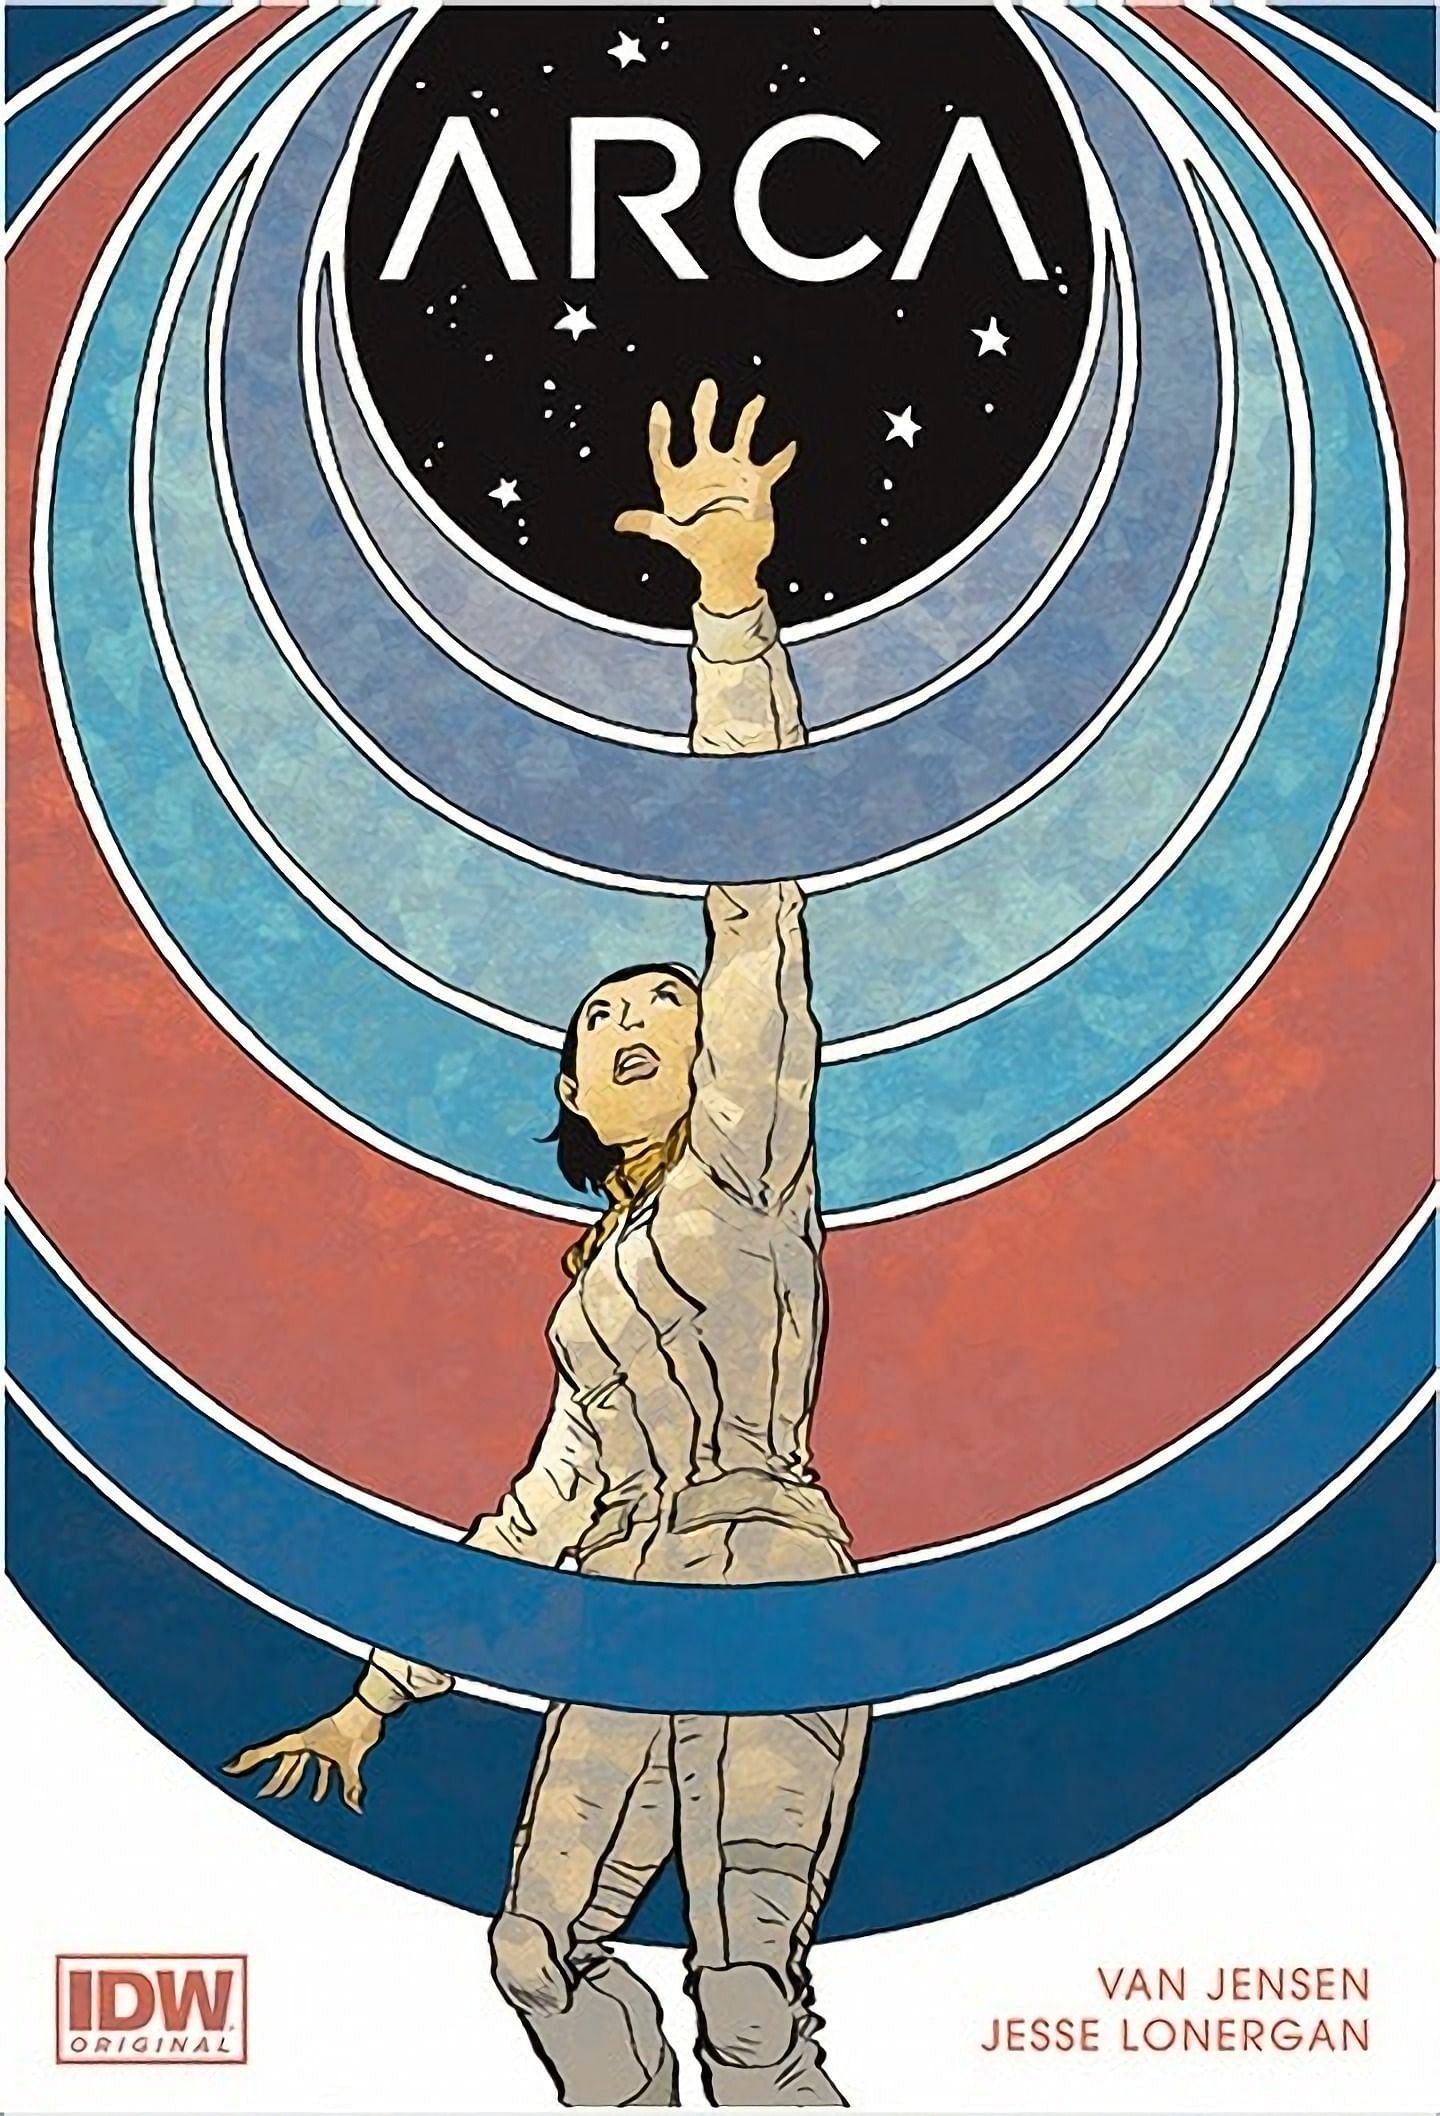 Arca&#039;s comic cover (Image via IDW Publishing)